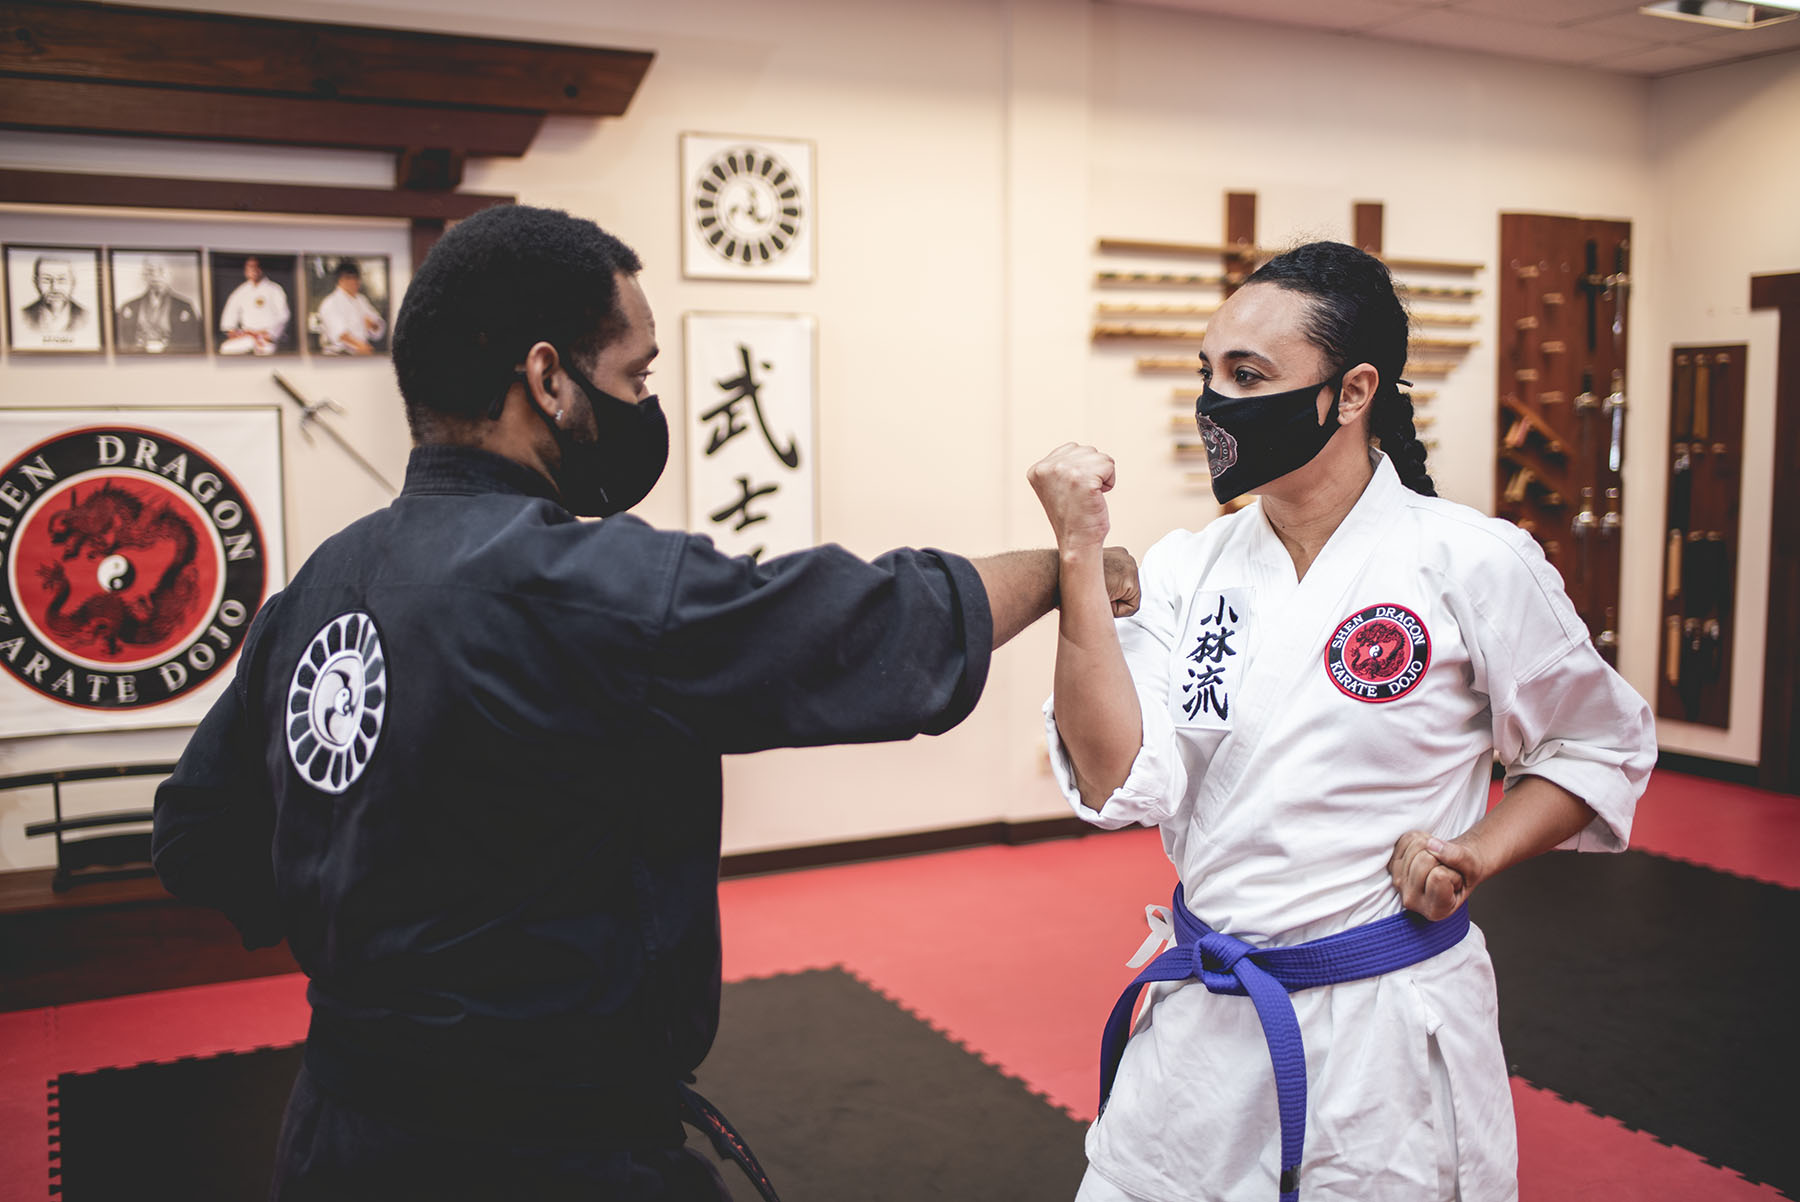 //www.shendragonvi.com/wp-content/uploads/2018/02/st-thomas-karate-dojo-20.jpg